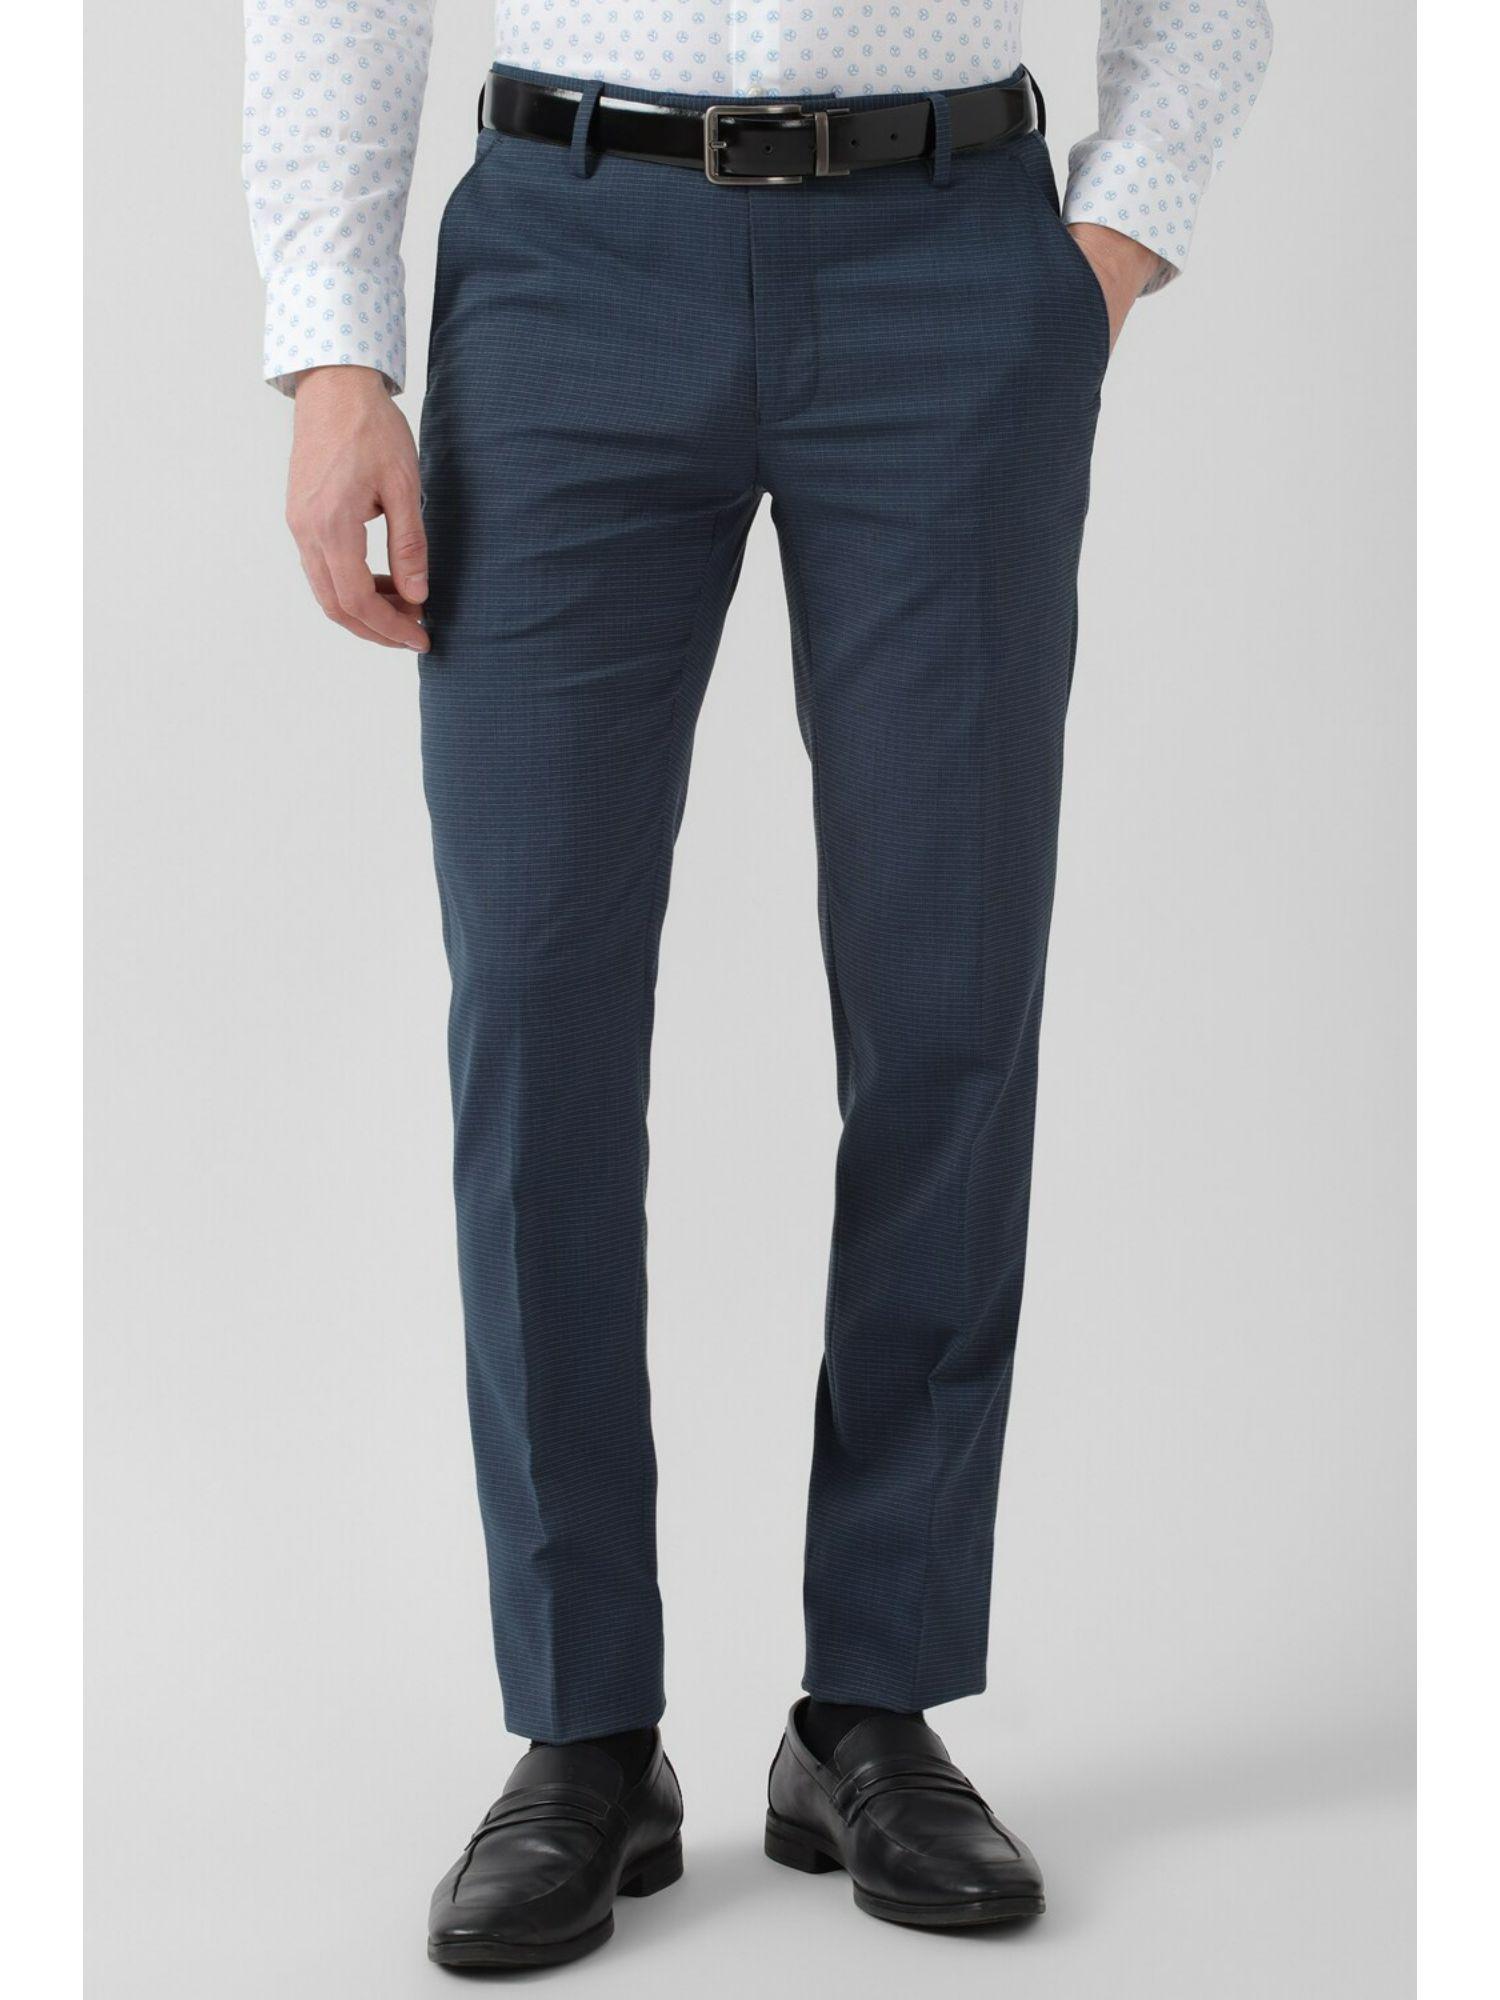 men-navy-blue-checks-slim-fit-formal-trousers